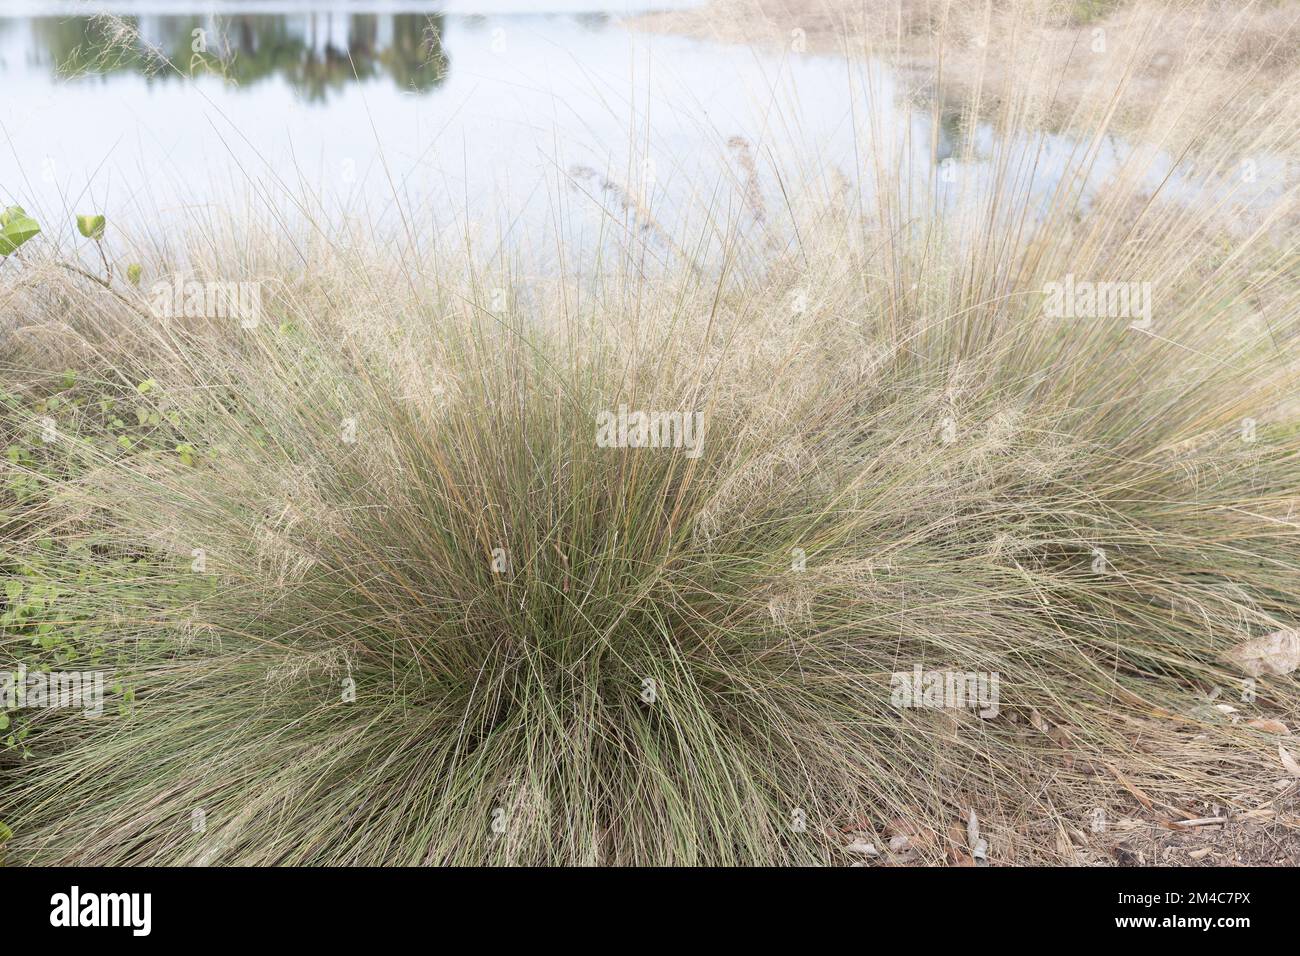 Muhlenbergia capillaris - muhly grass - next to a lake in southwest Florida. Stock Photo